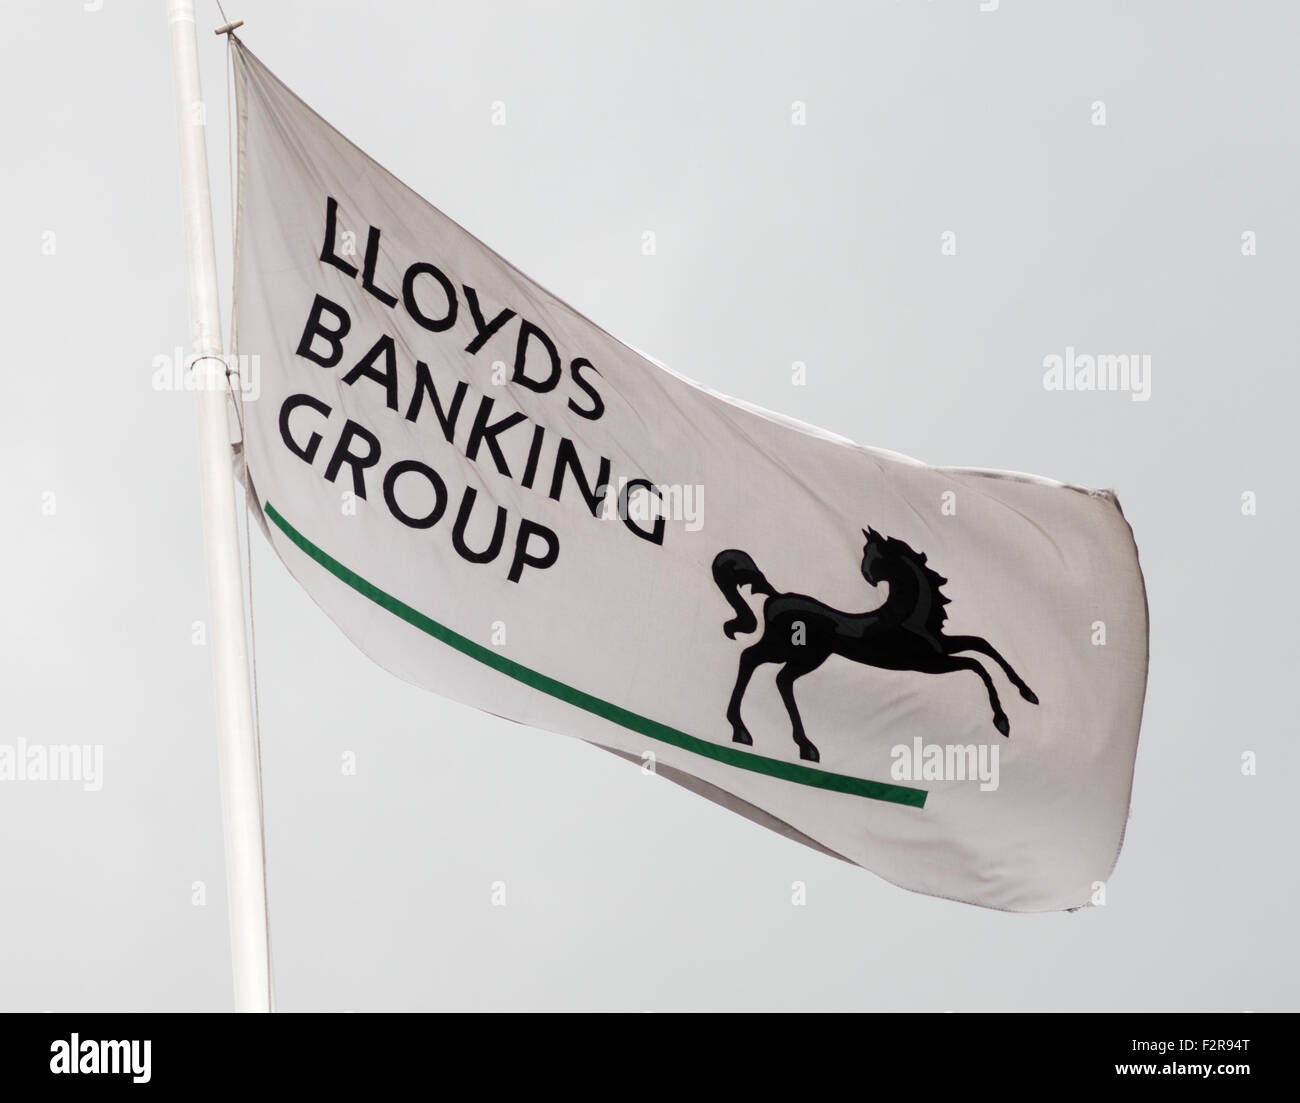 Lloyds Banking Group drapeau Newcastle-upon-Tyne, Angleterre du Nord-Est, Royaume-Uni Banque D'Images